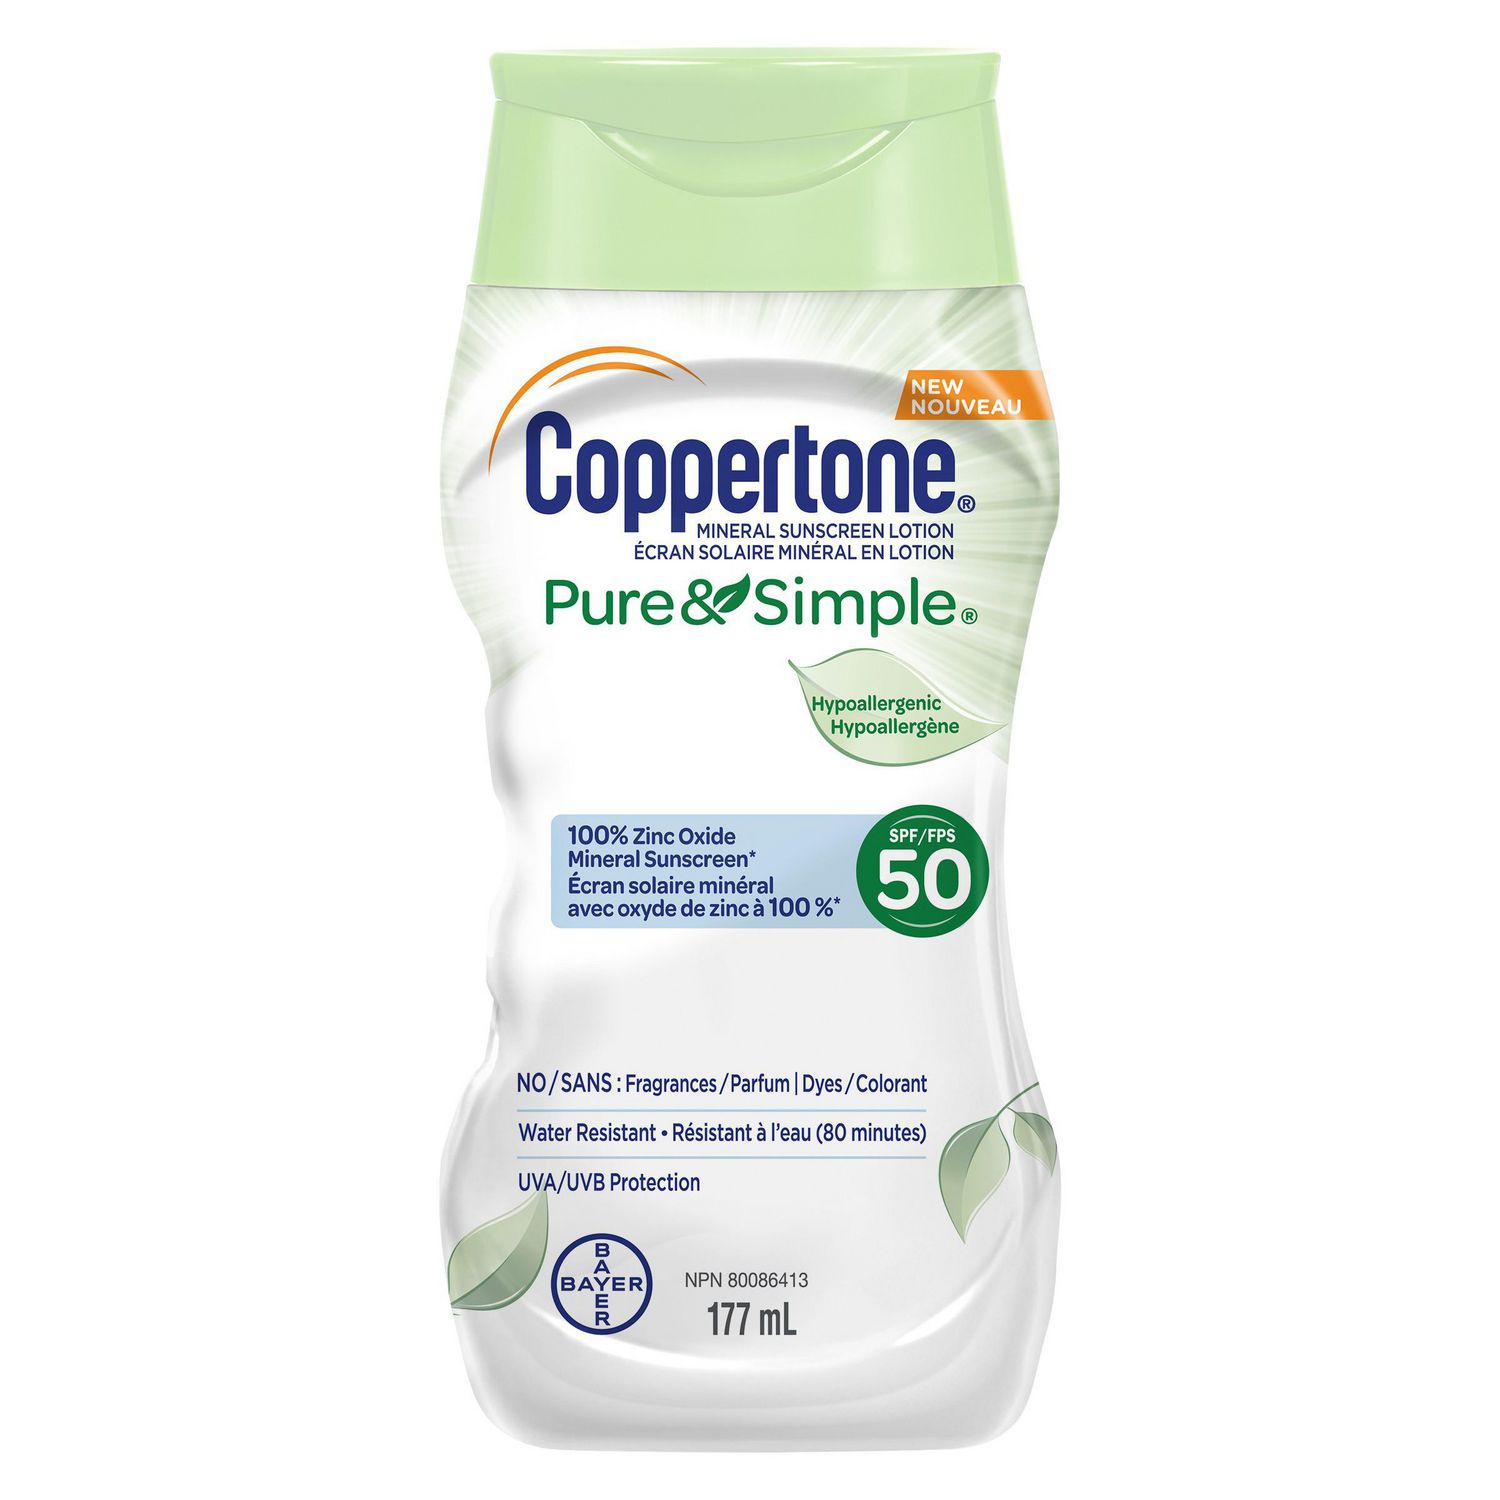 coppertone pure & simple sunscreen